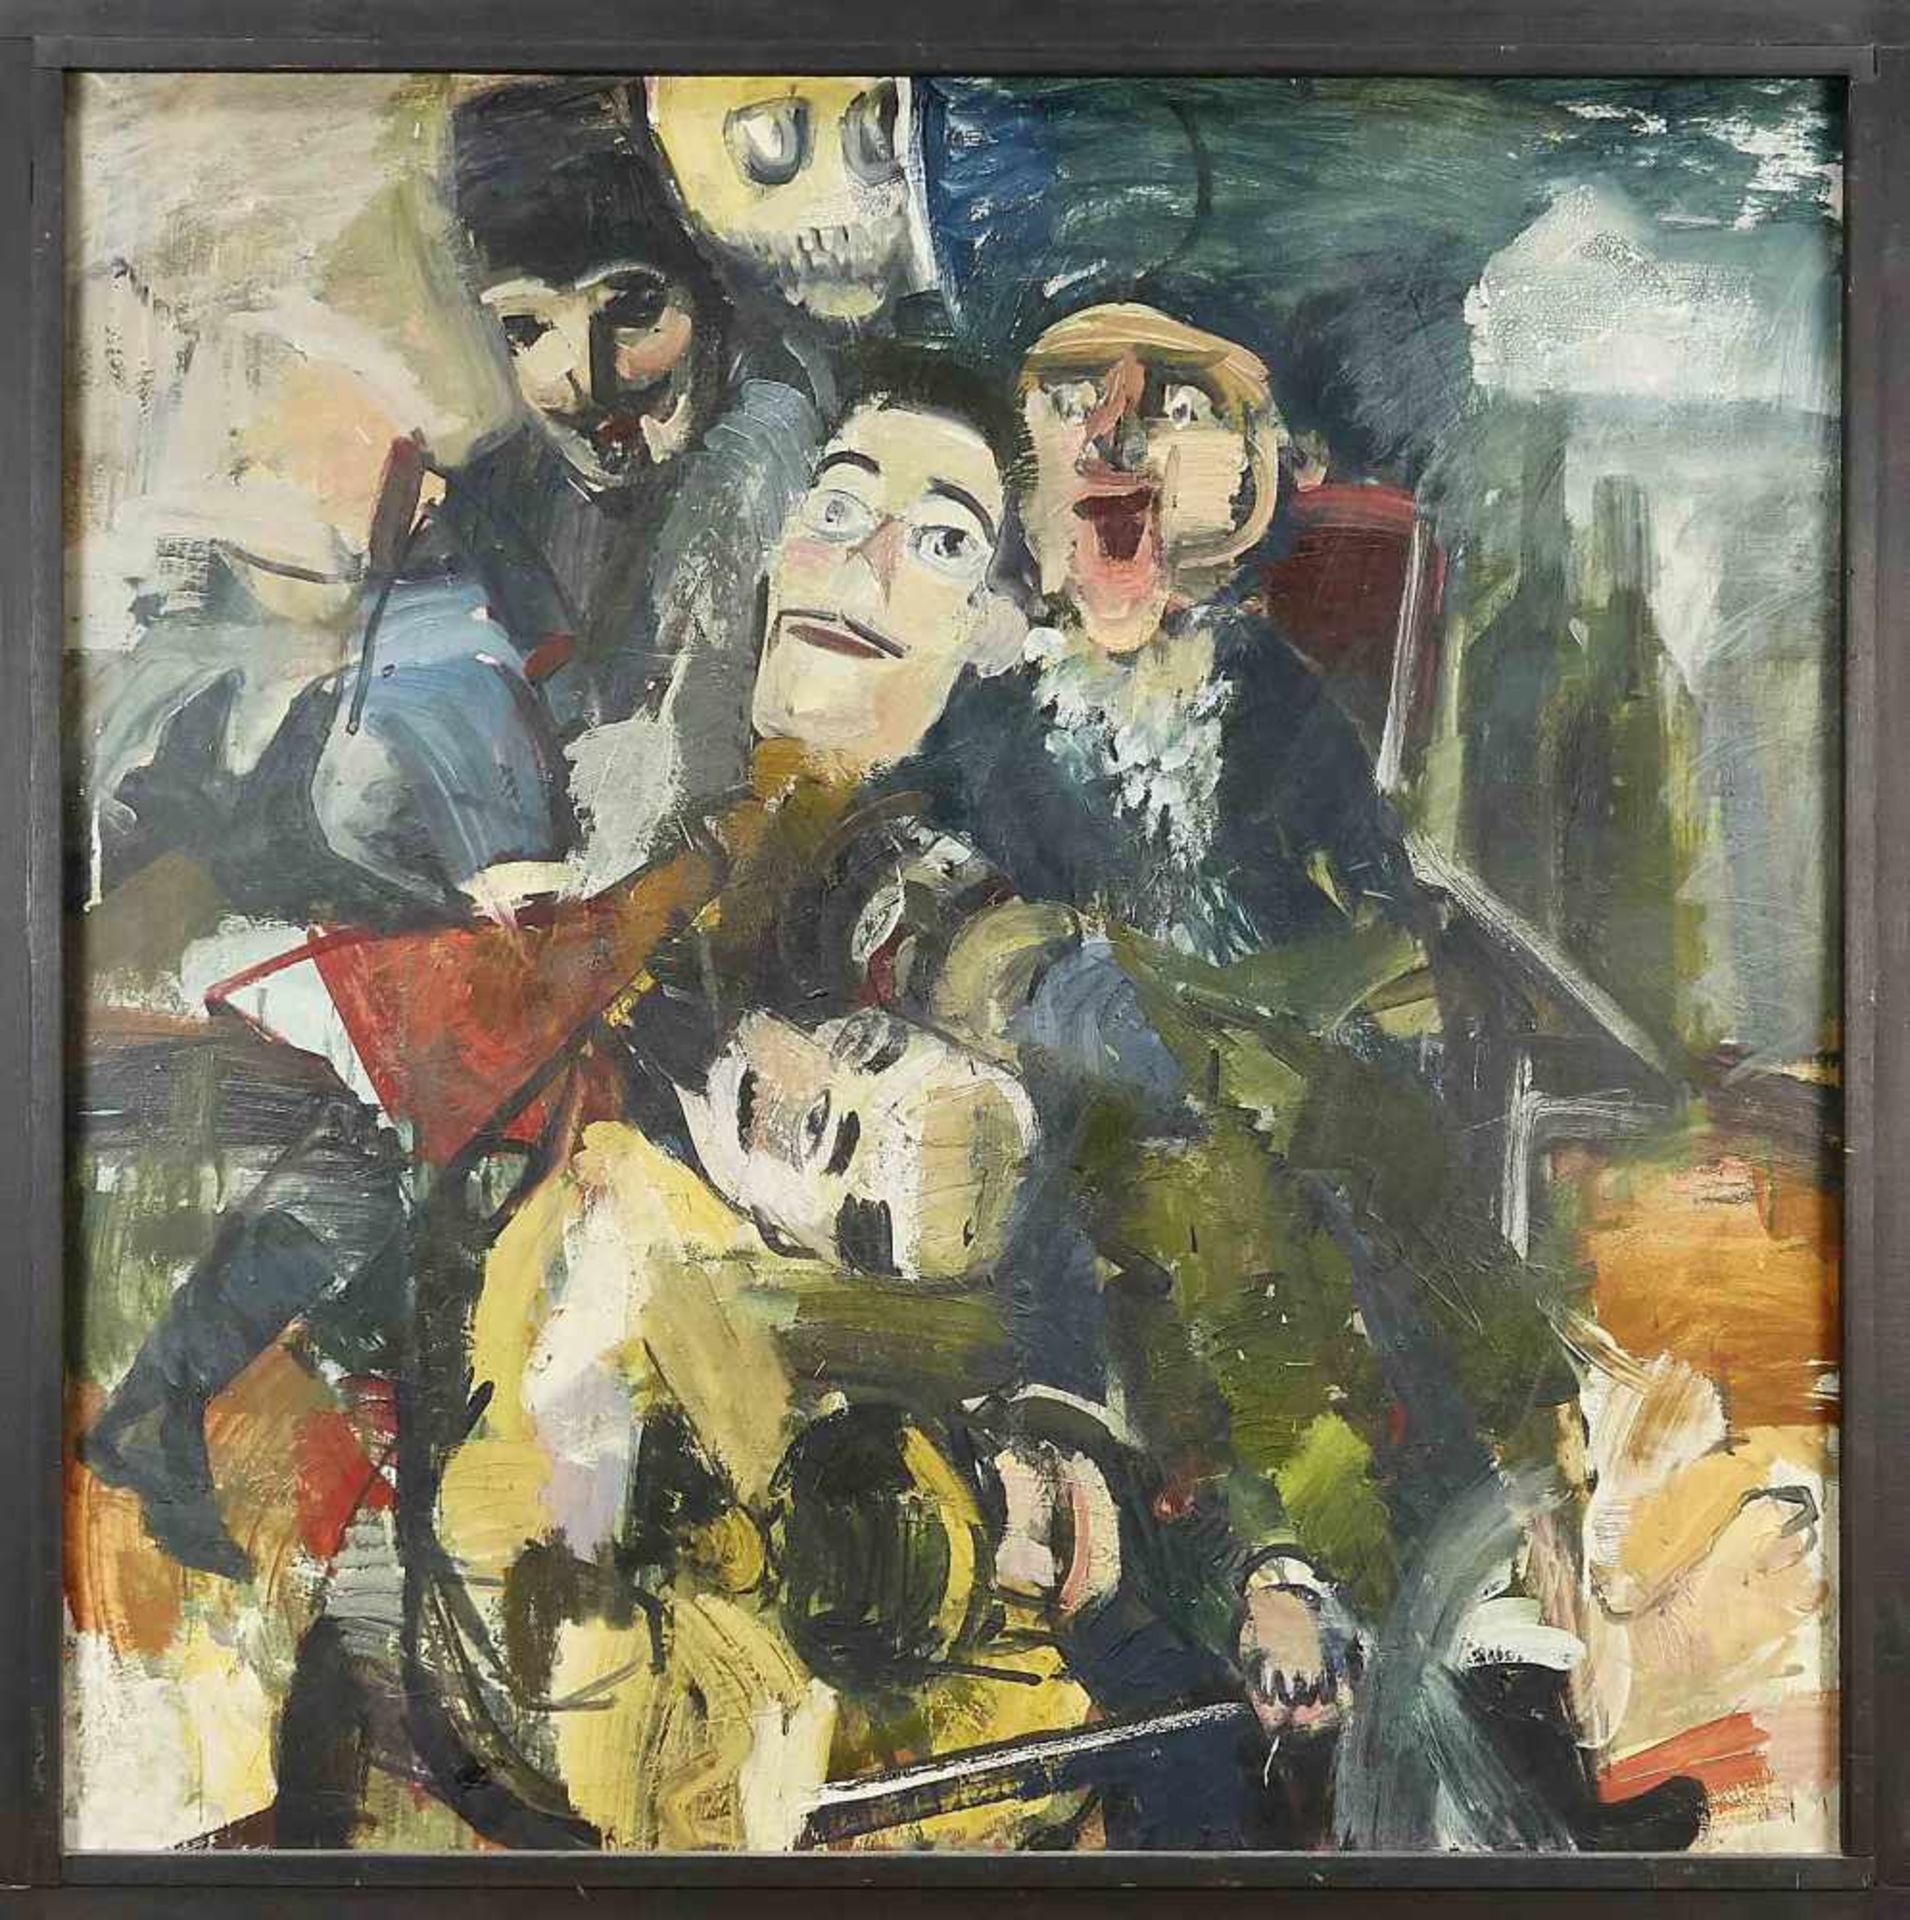 Brigitte Fugmann (1948-1992), Berlin painter, stud. in Weißensee with Arno Mohr and Walter<